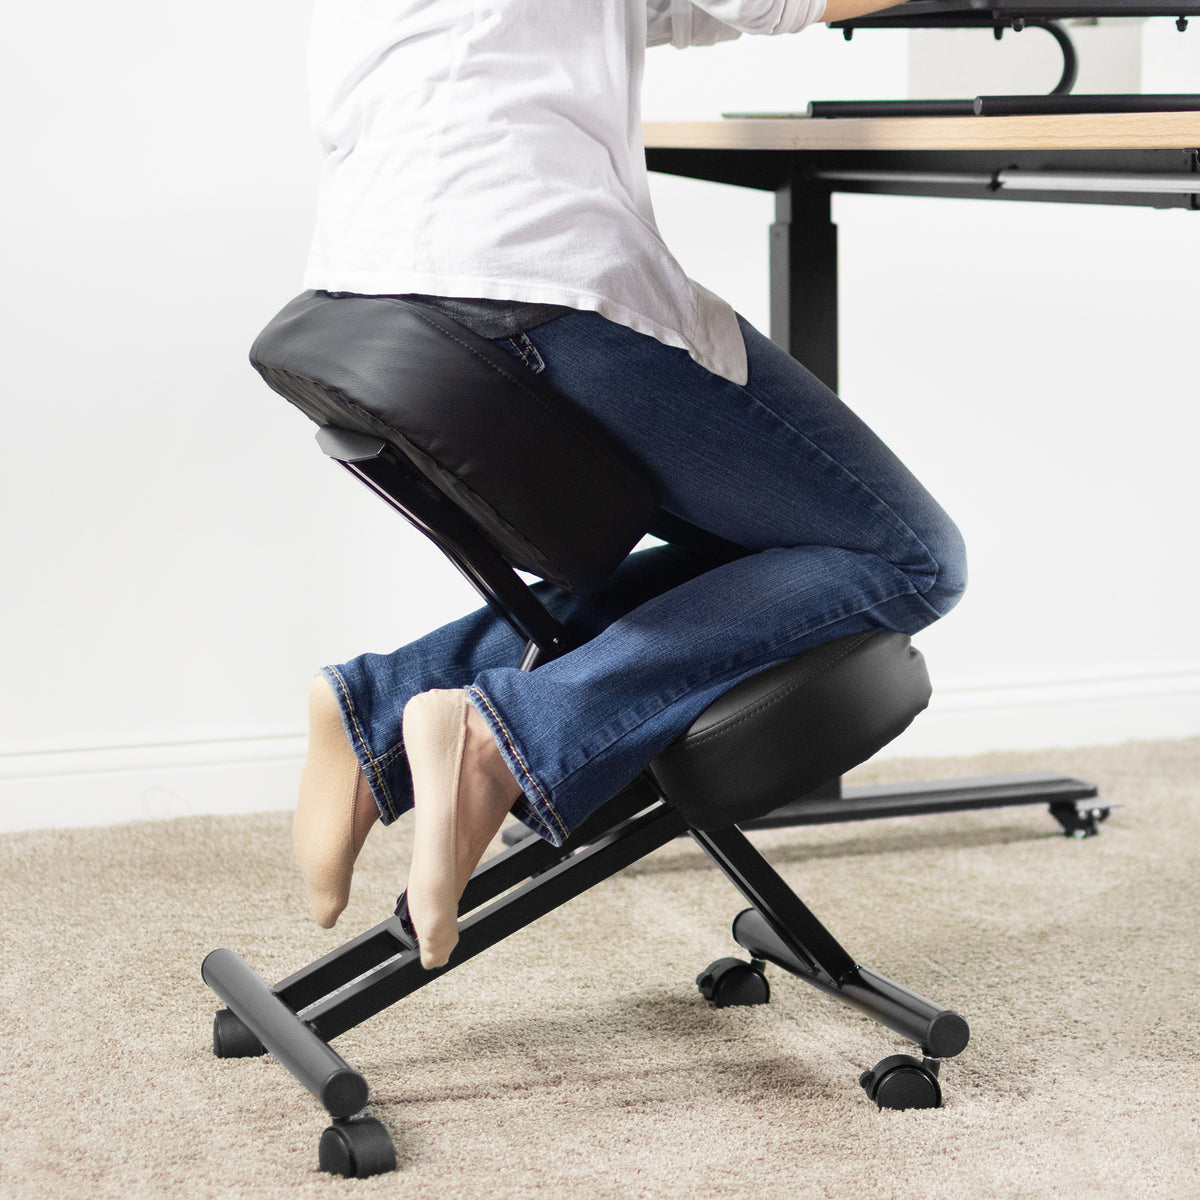 Ergonomic Kneeling Chair Adjustable Stool Portable  Home Office Chairs 250 c 02 